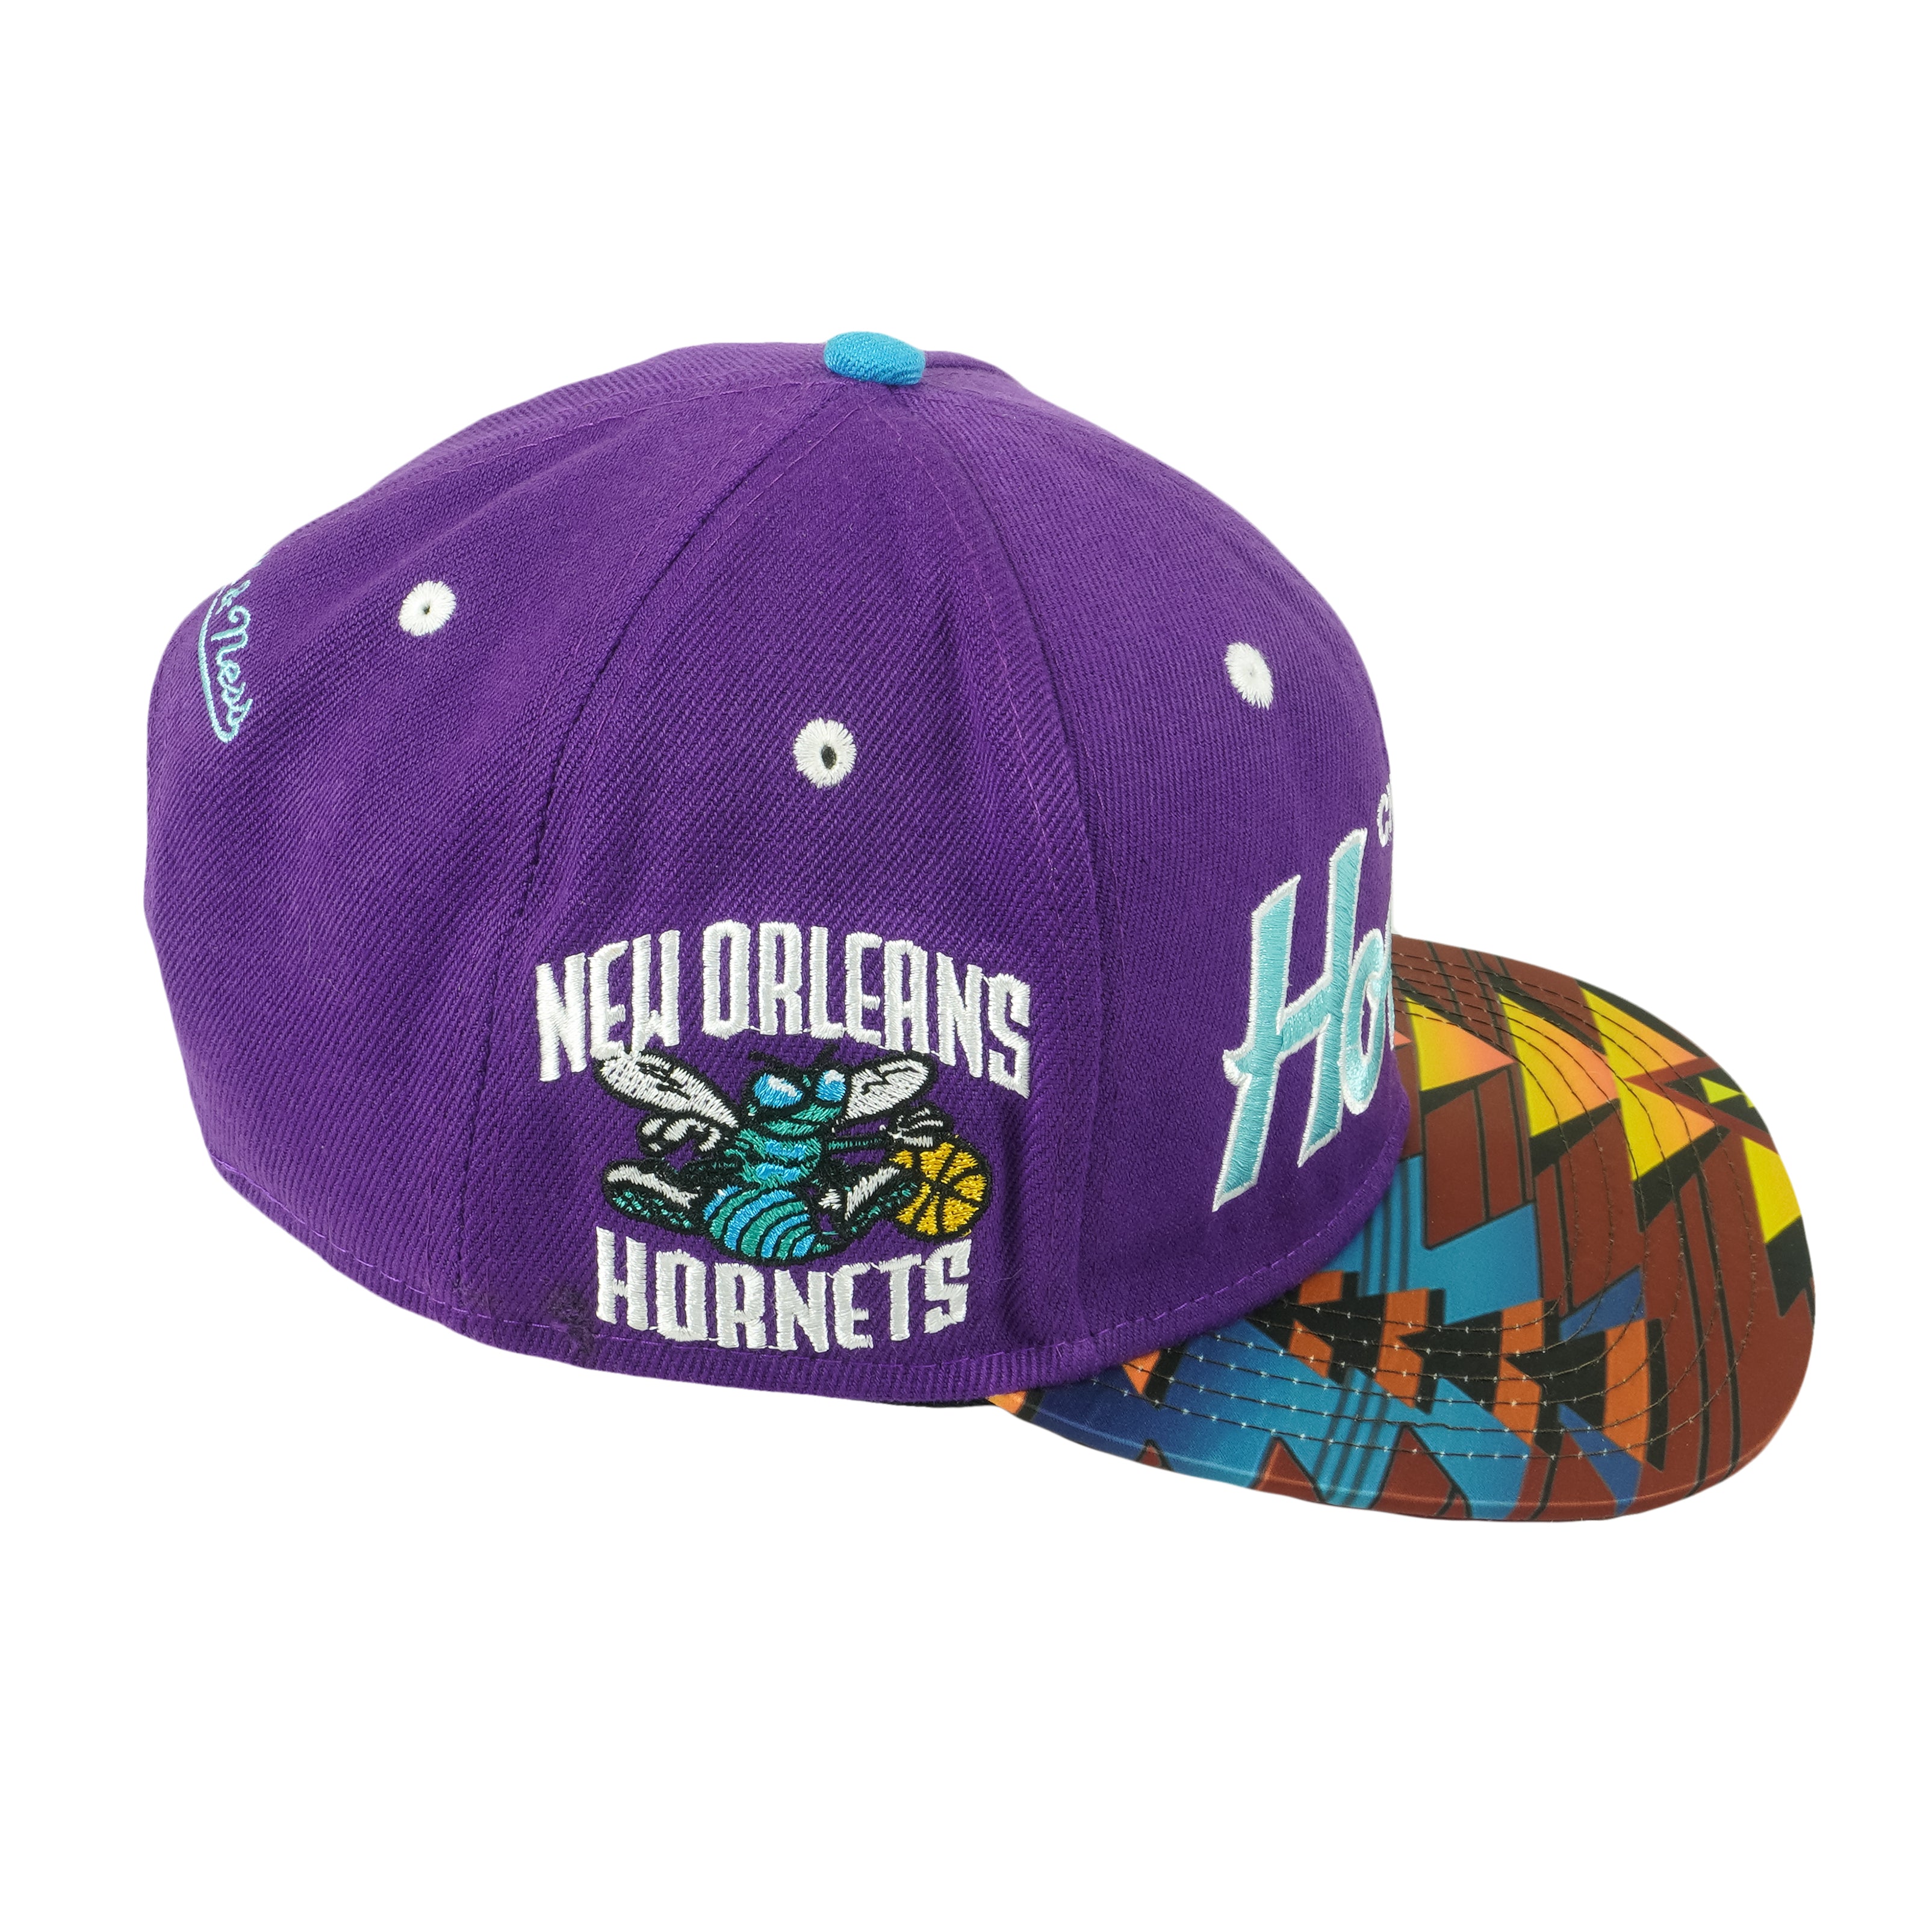 Vintage Charlotte Hornets NBA Snapback Hat